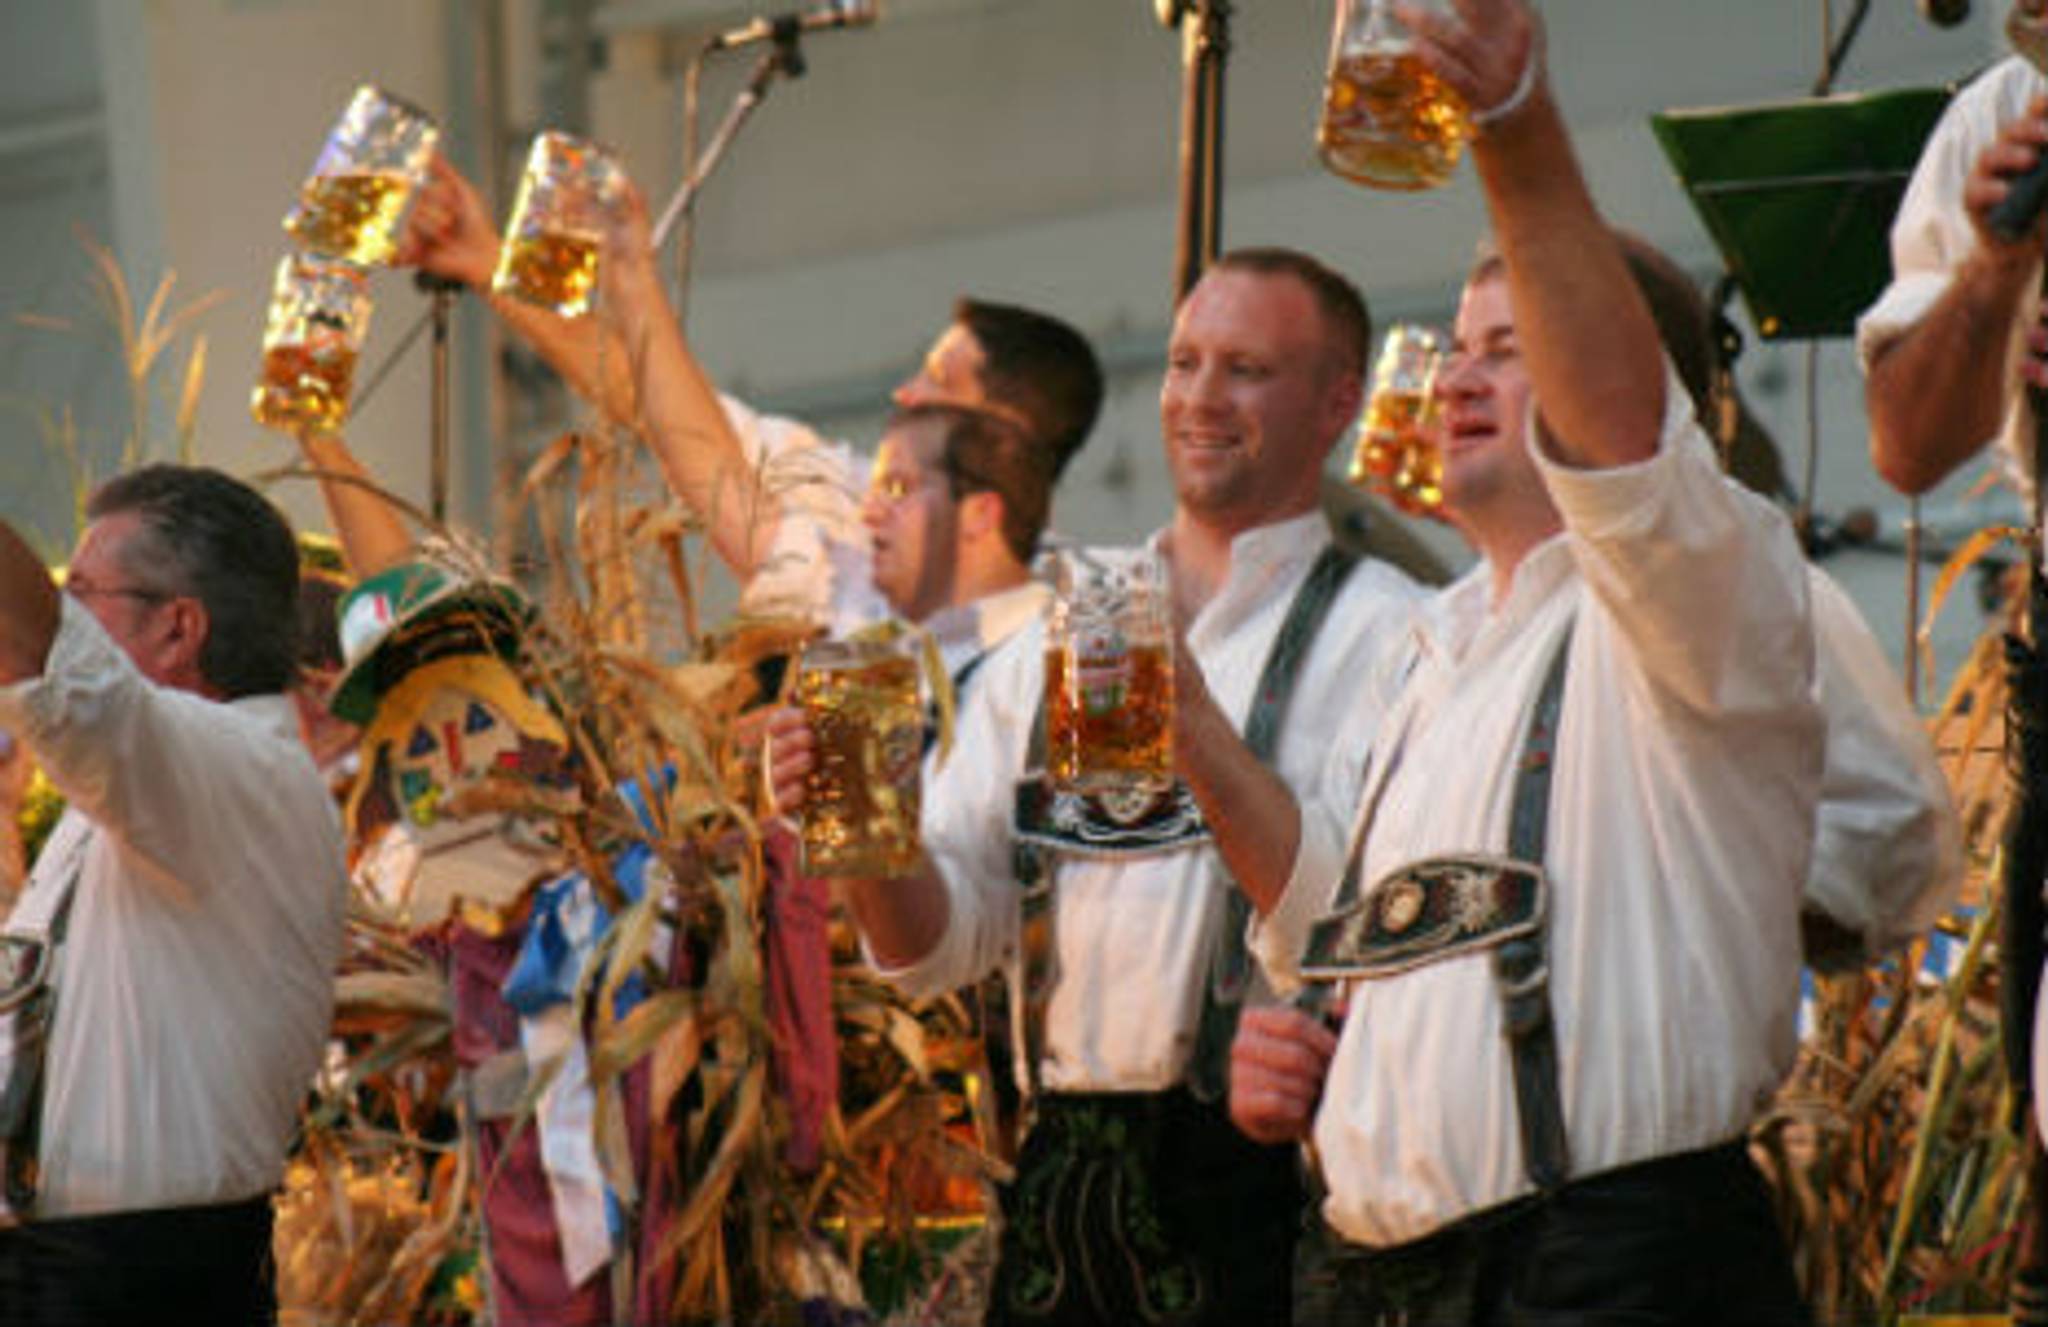 Are Germans still boozing with a bierkrug?